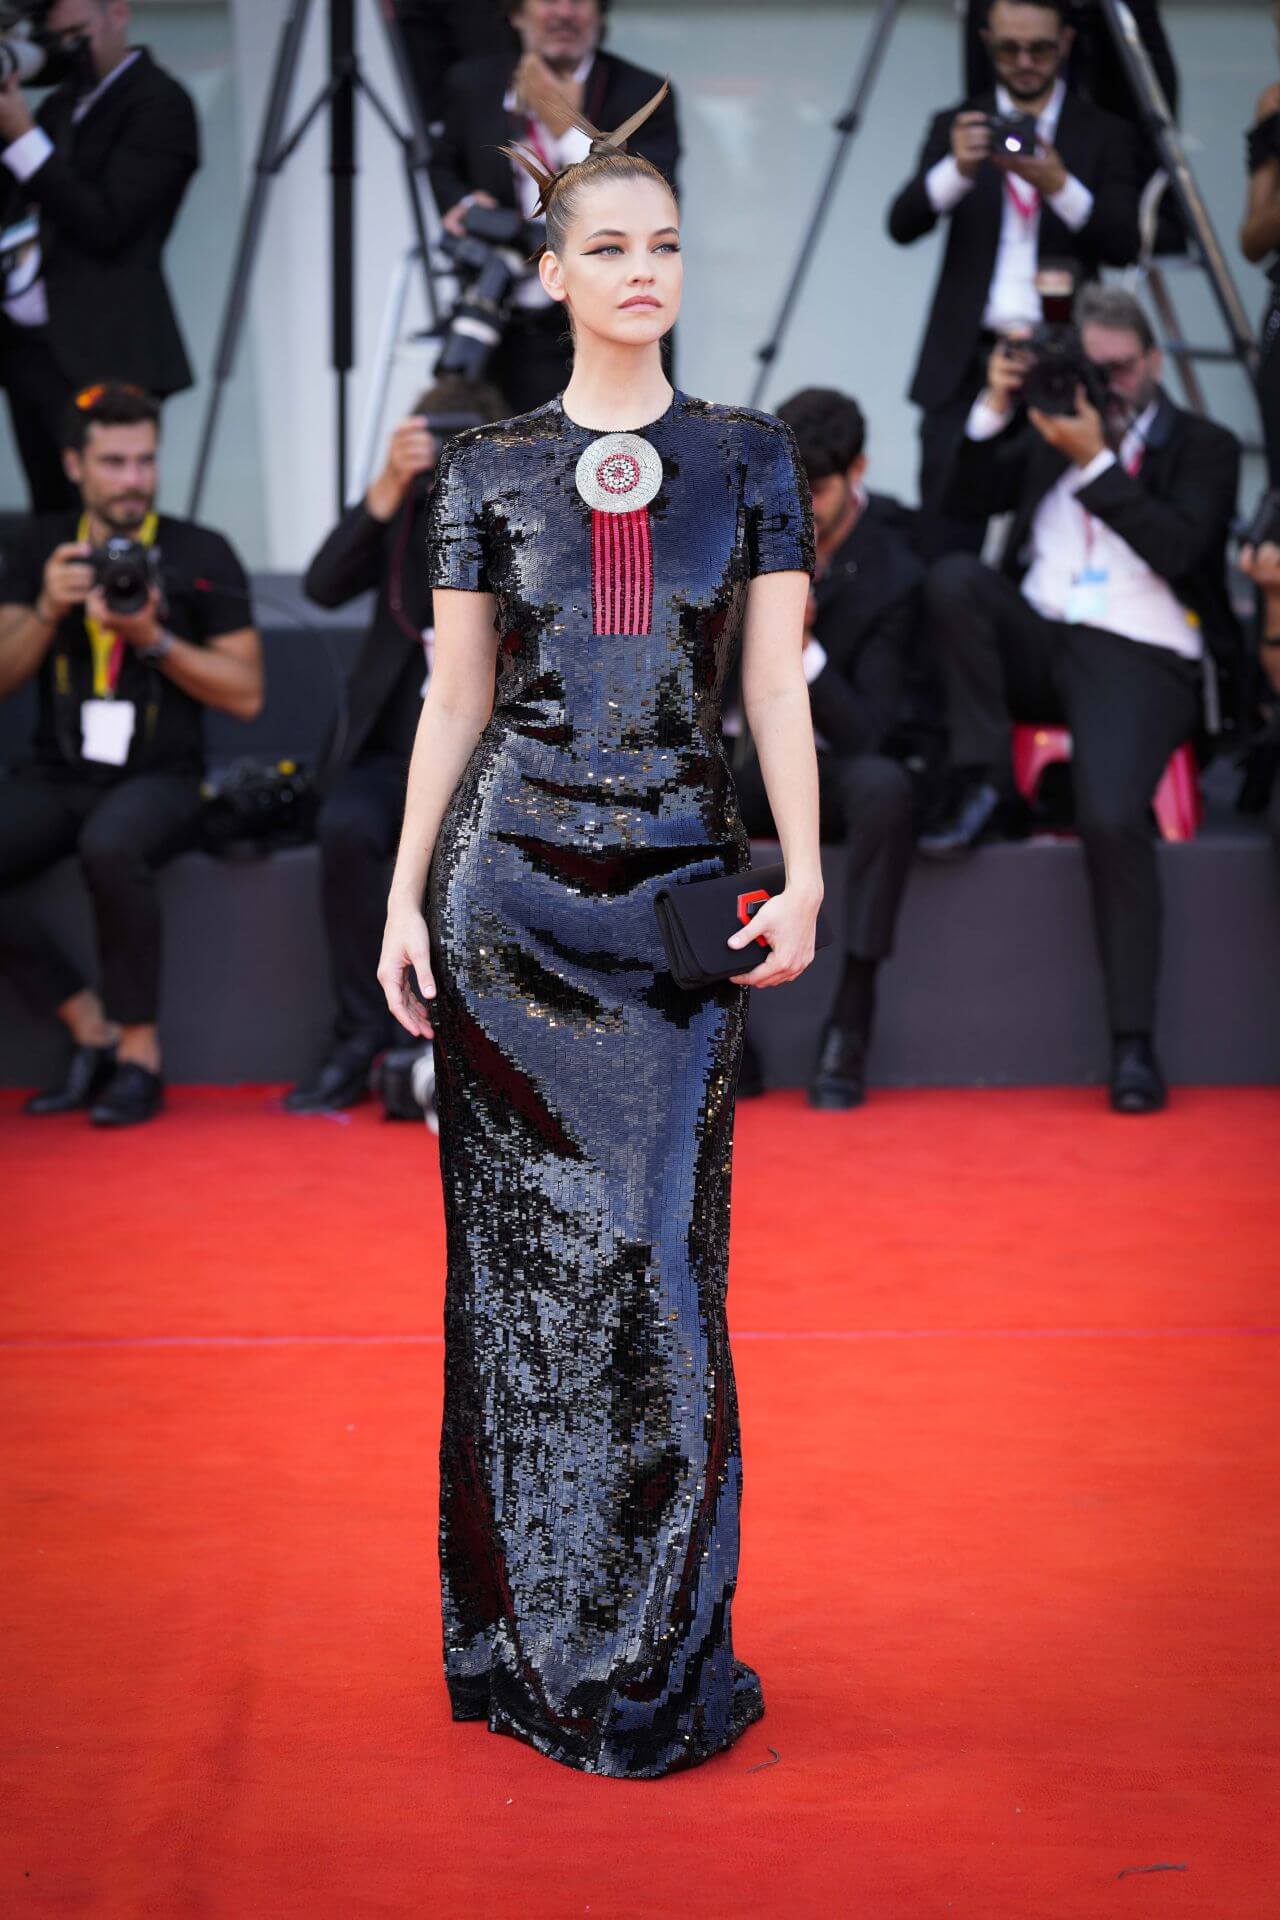 Barbara Palvin  In Shiny Black Shimmery Half Sleeves Long Dress At “White Noise” Premiere In Venice International Film Festival